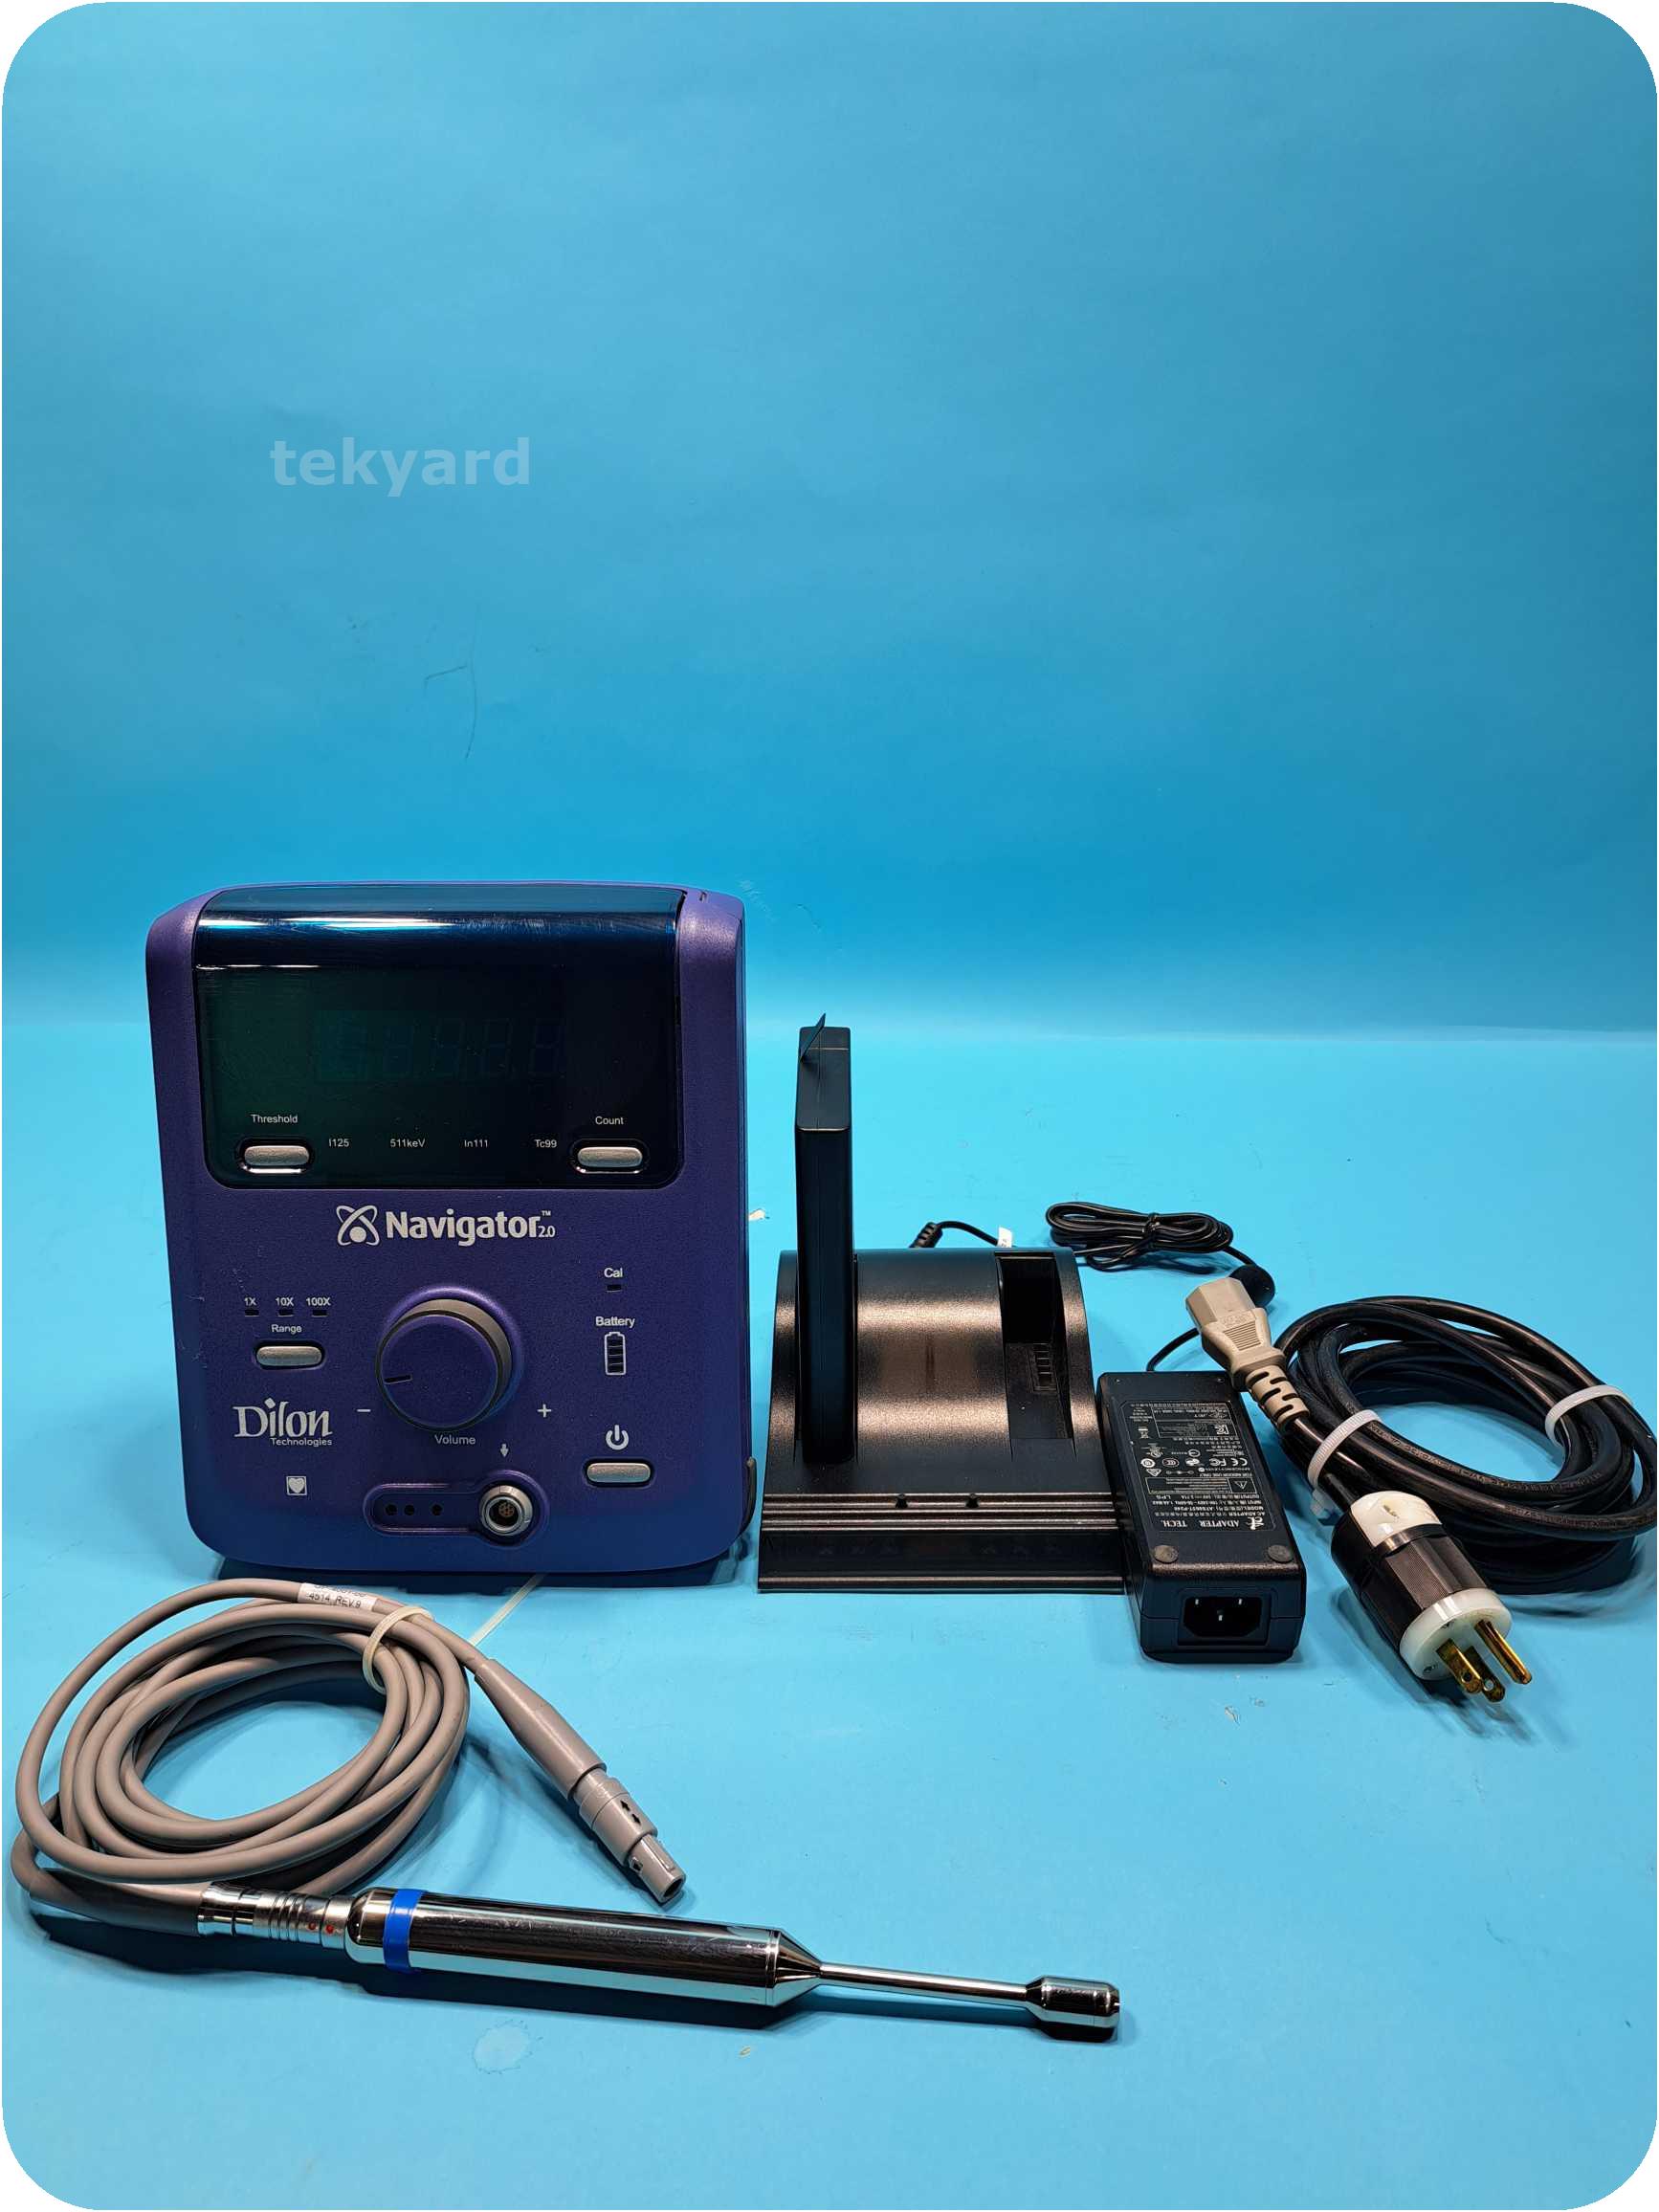 tekyard, LLC. - 357498-Dilon Navigator 2.0 Wireless Gamma Probe System